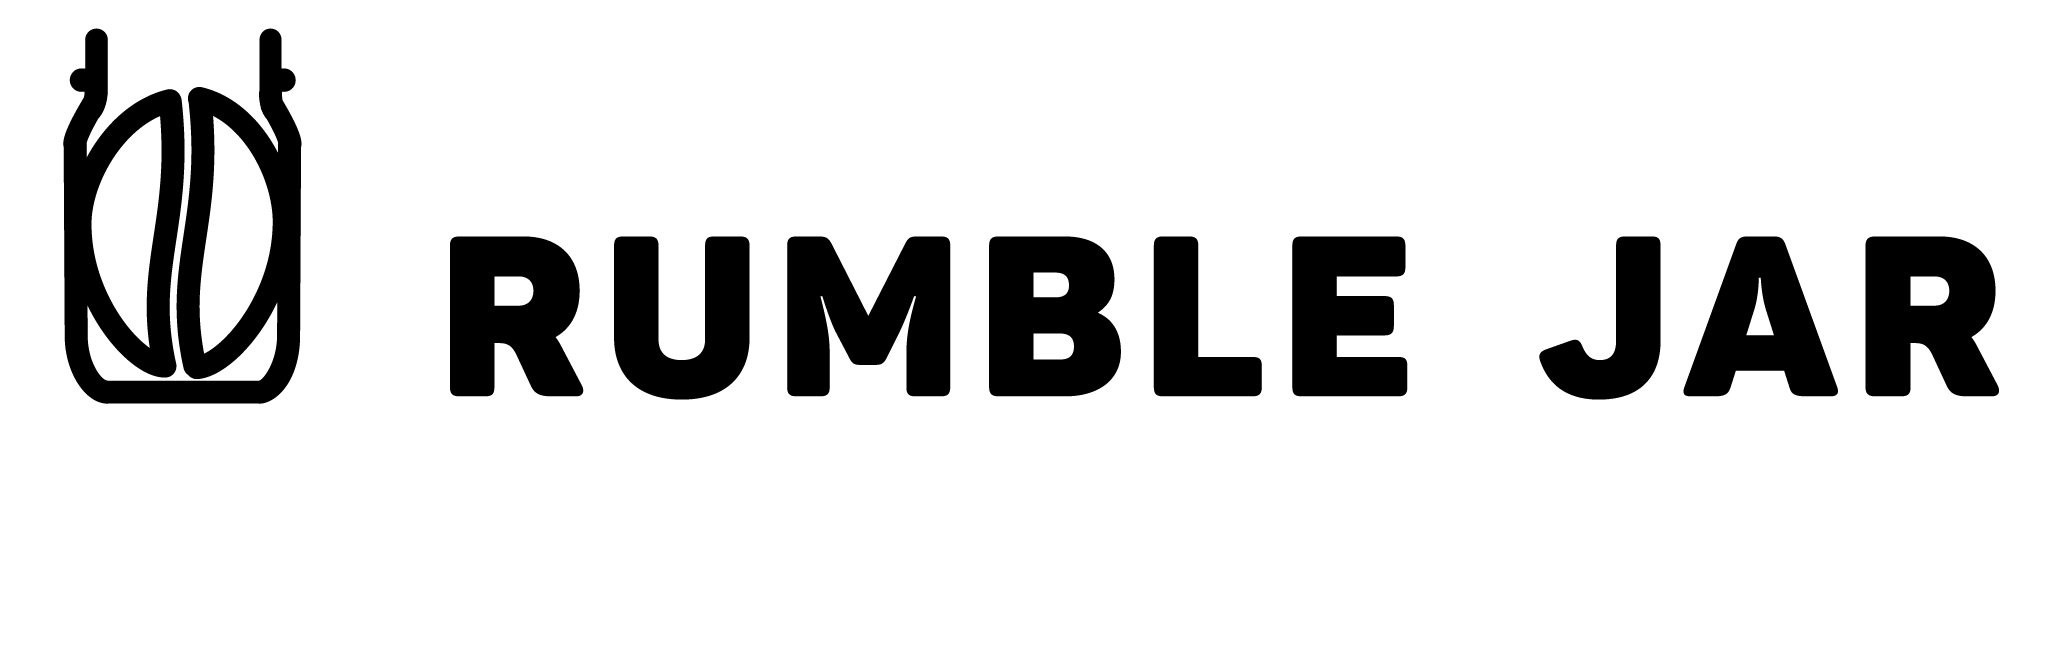 Rumble Jar logo